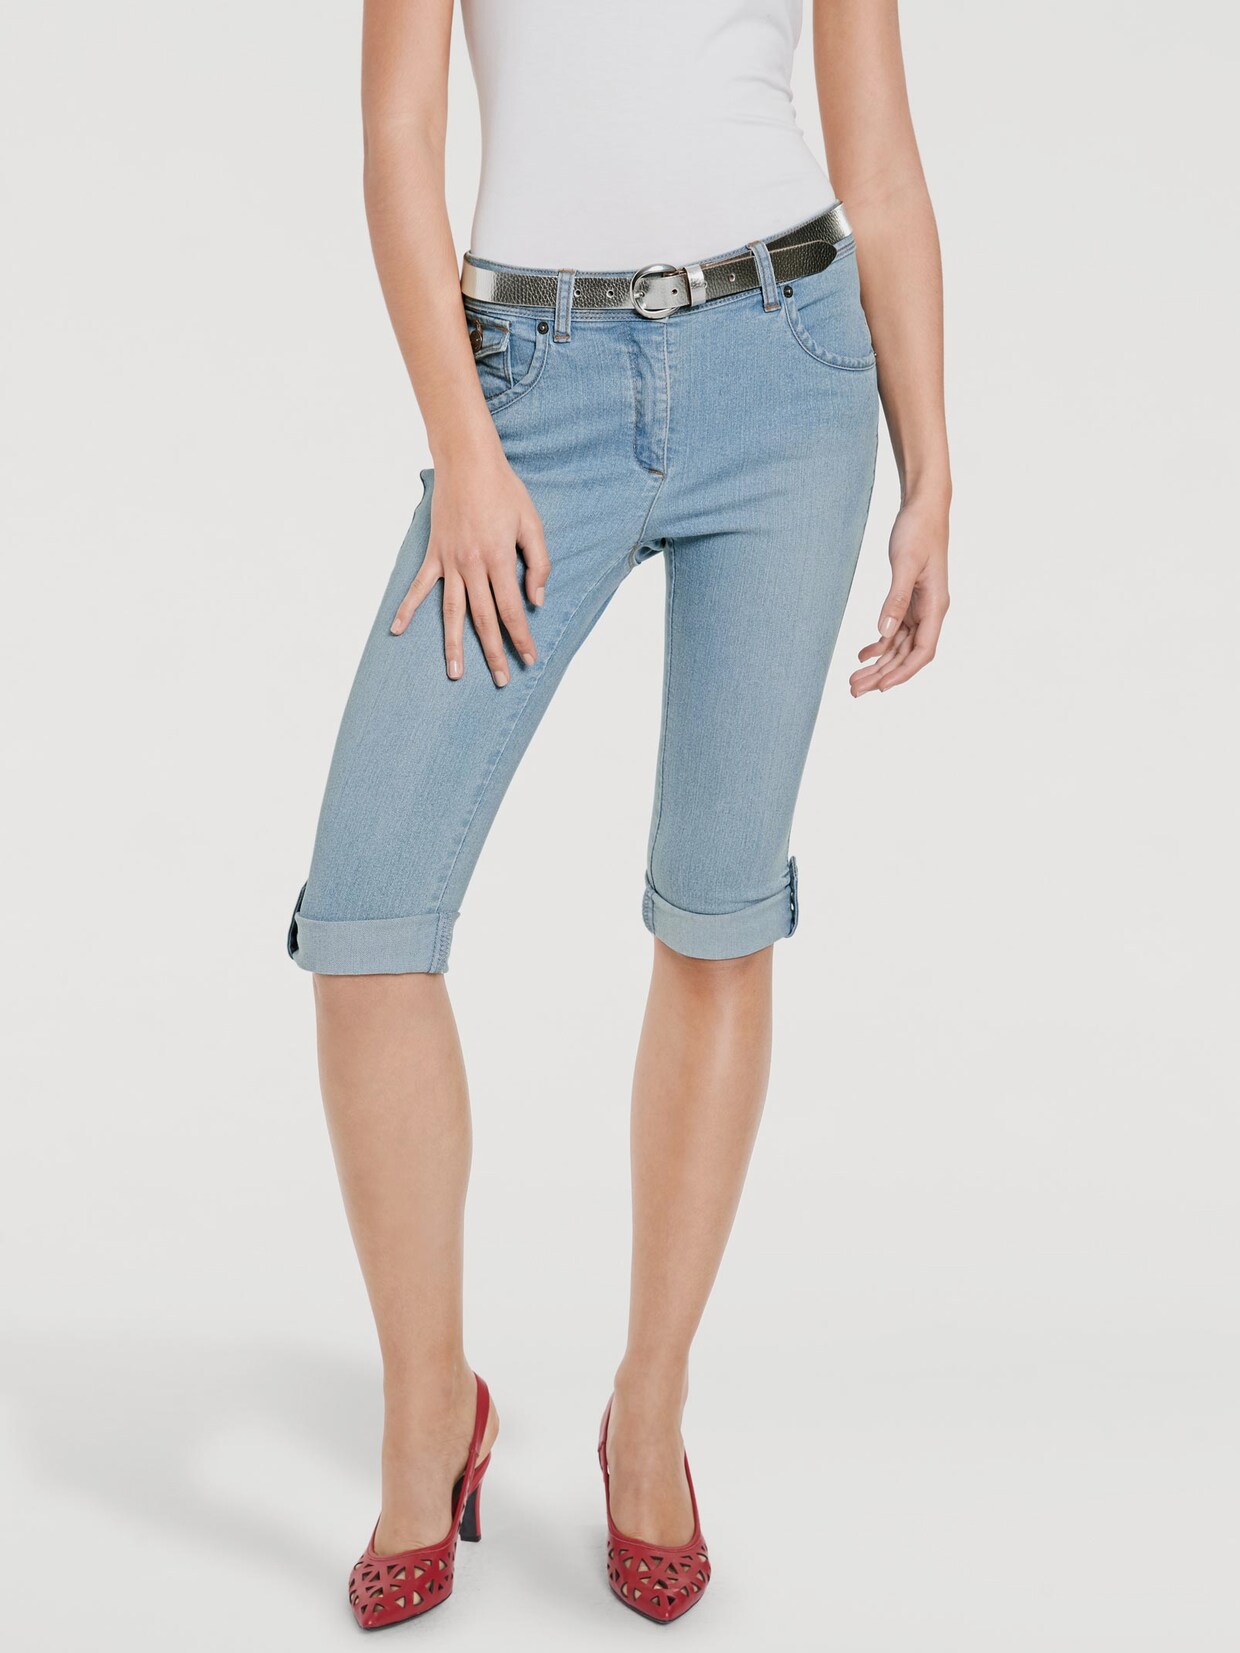 Ashley Brooke Capri-Jeans - bleached